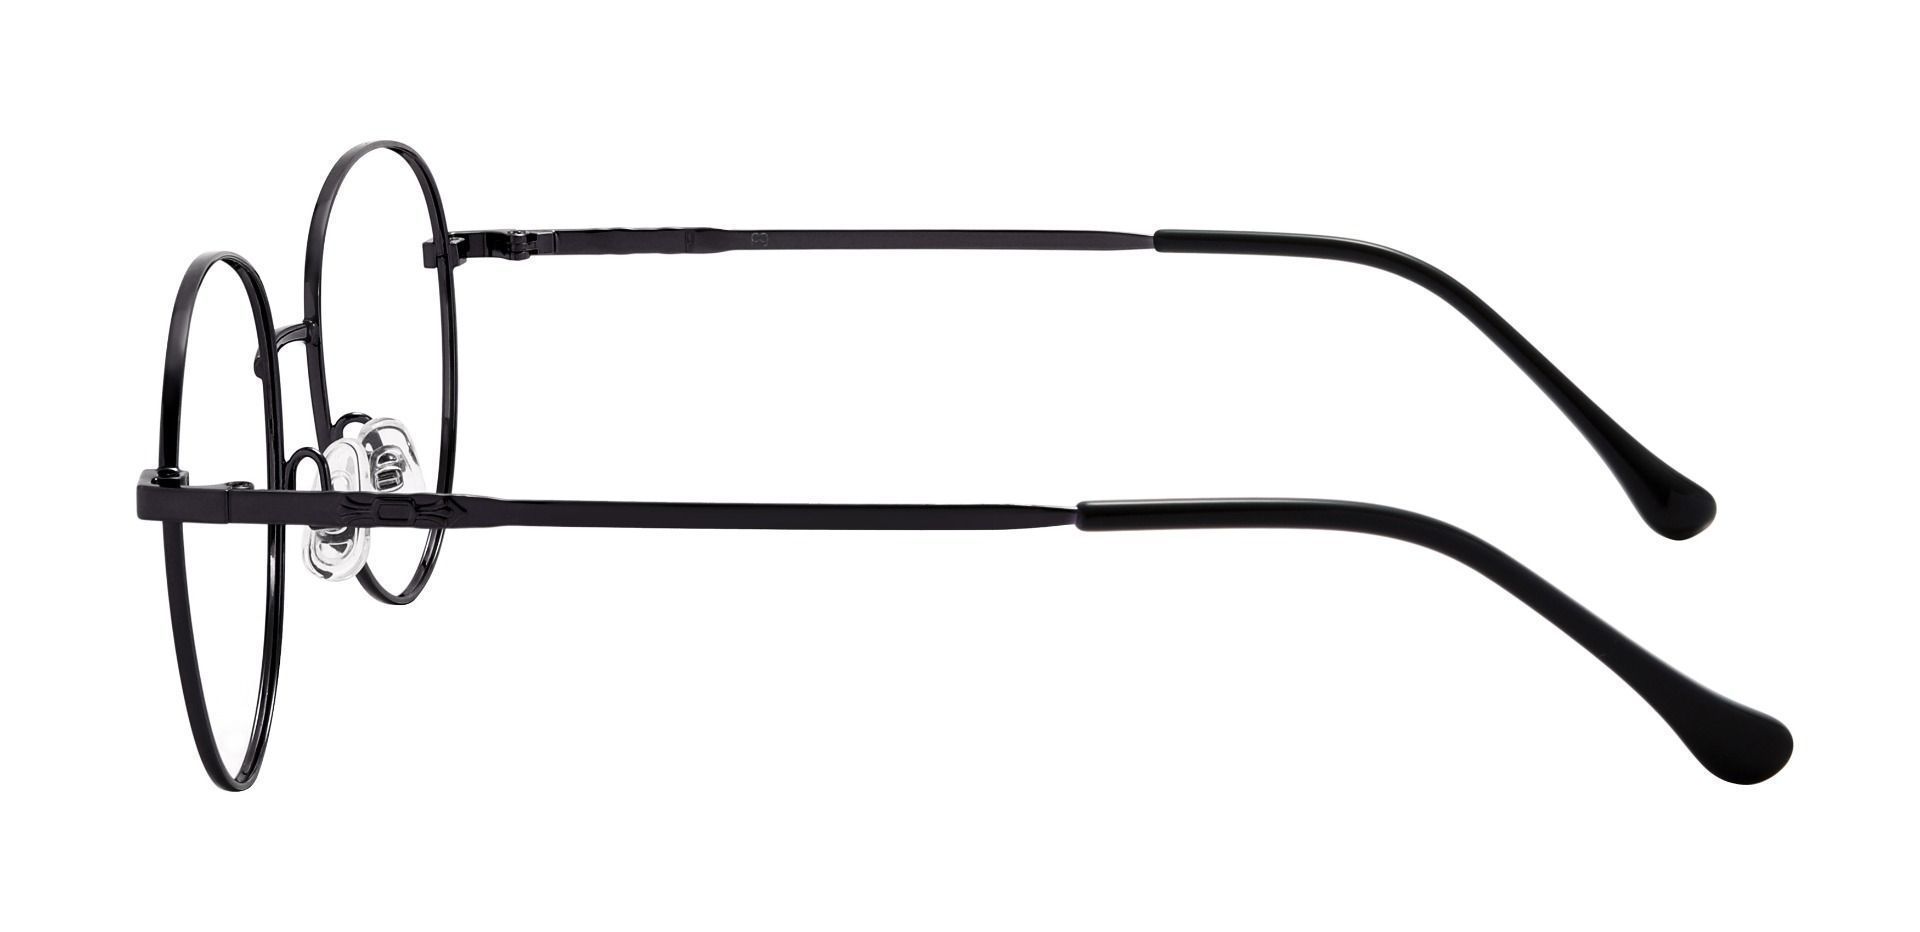 Vinita Oval Prescription Glasses - Black